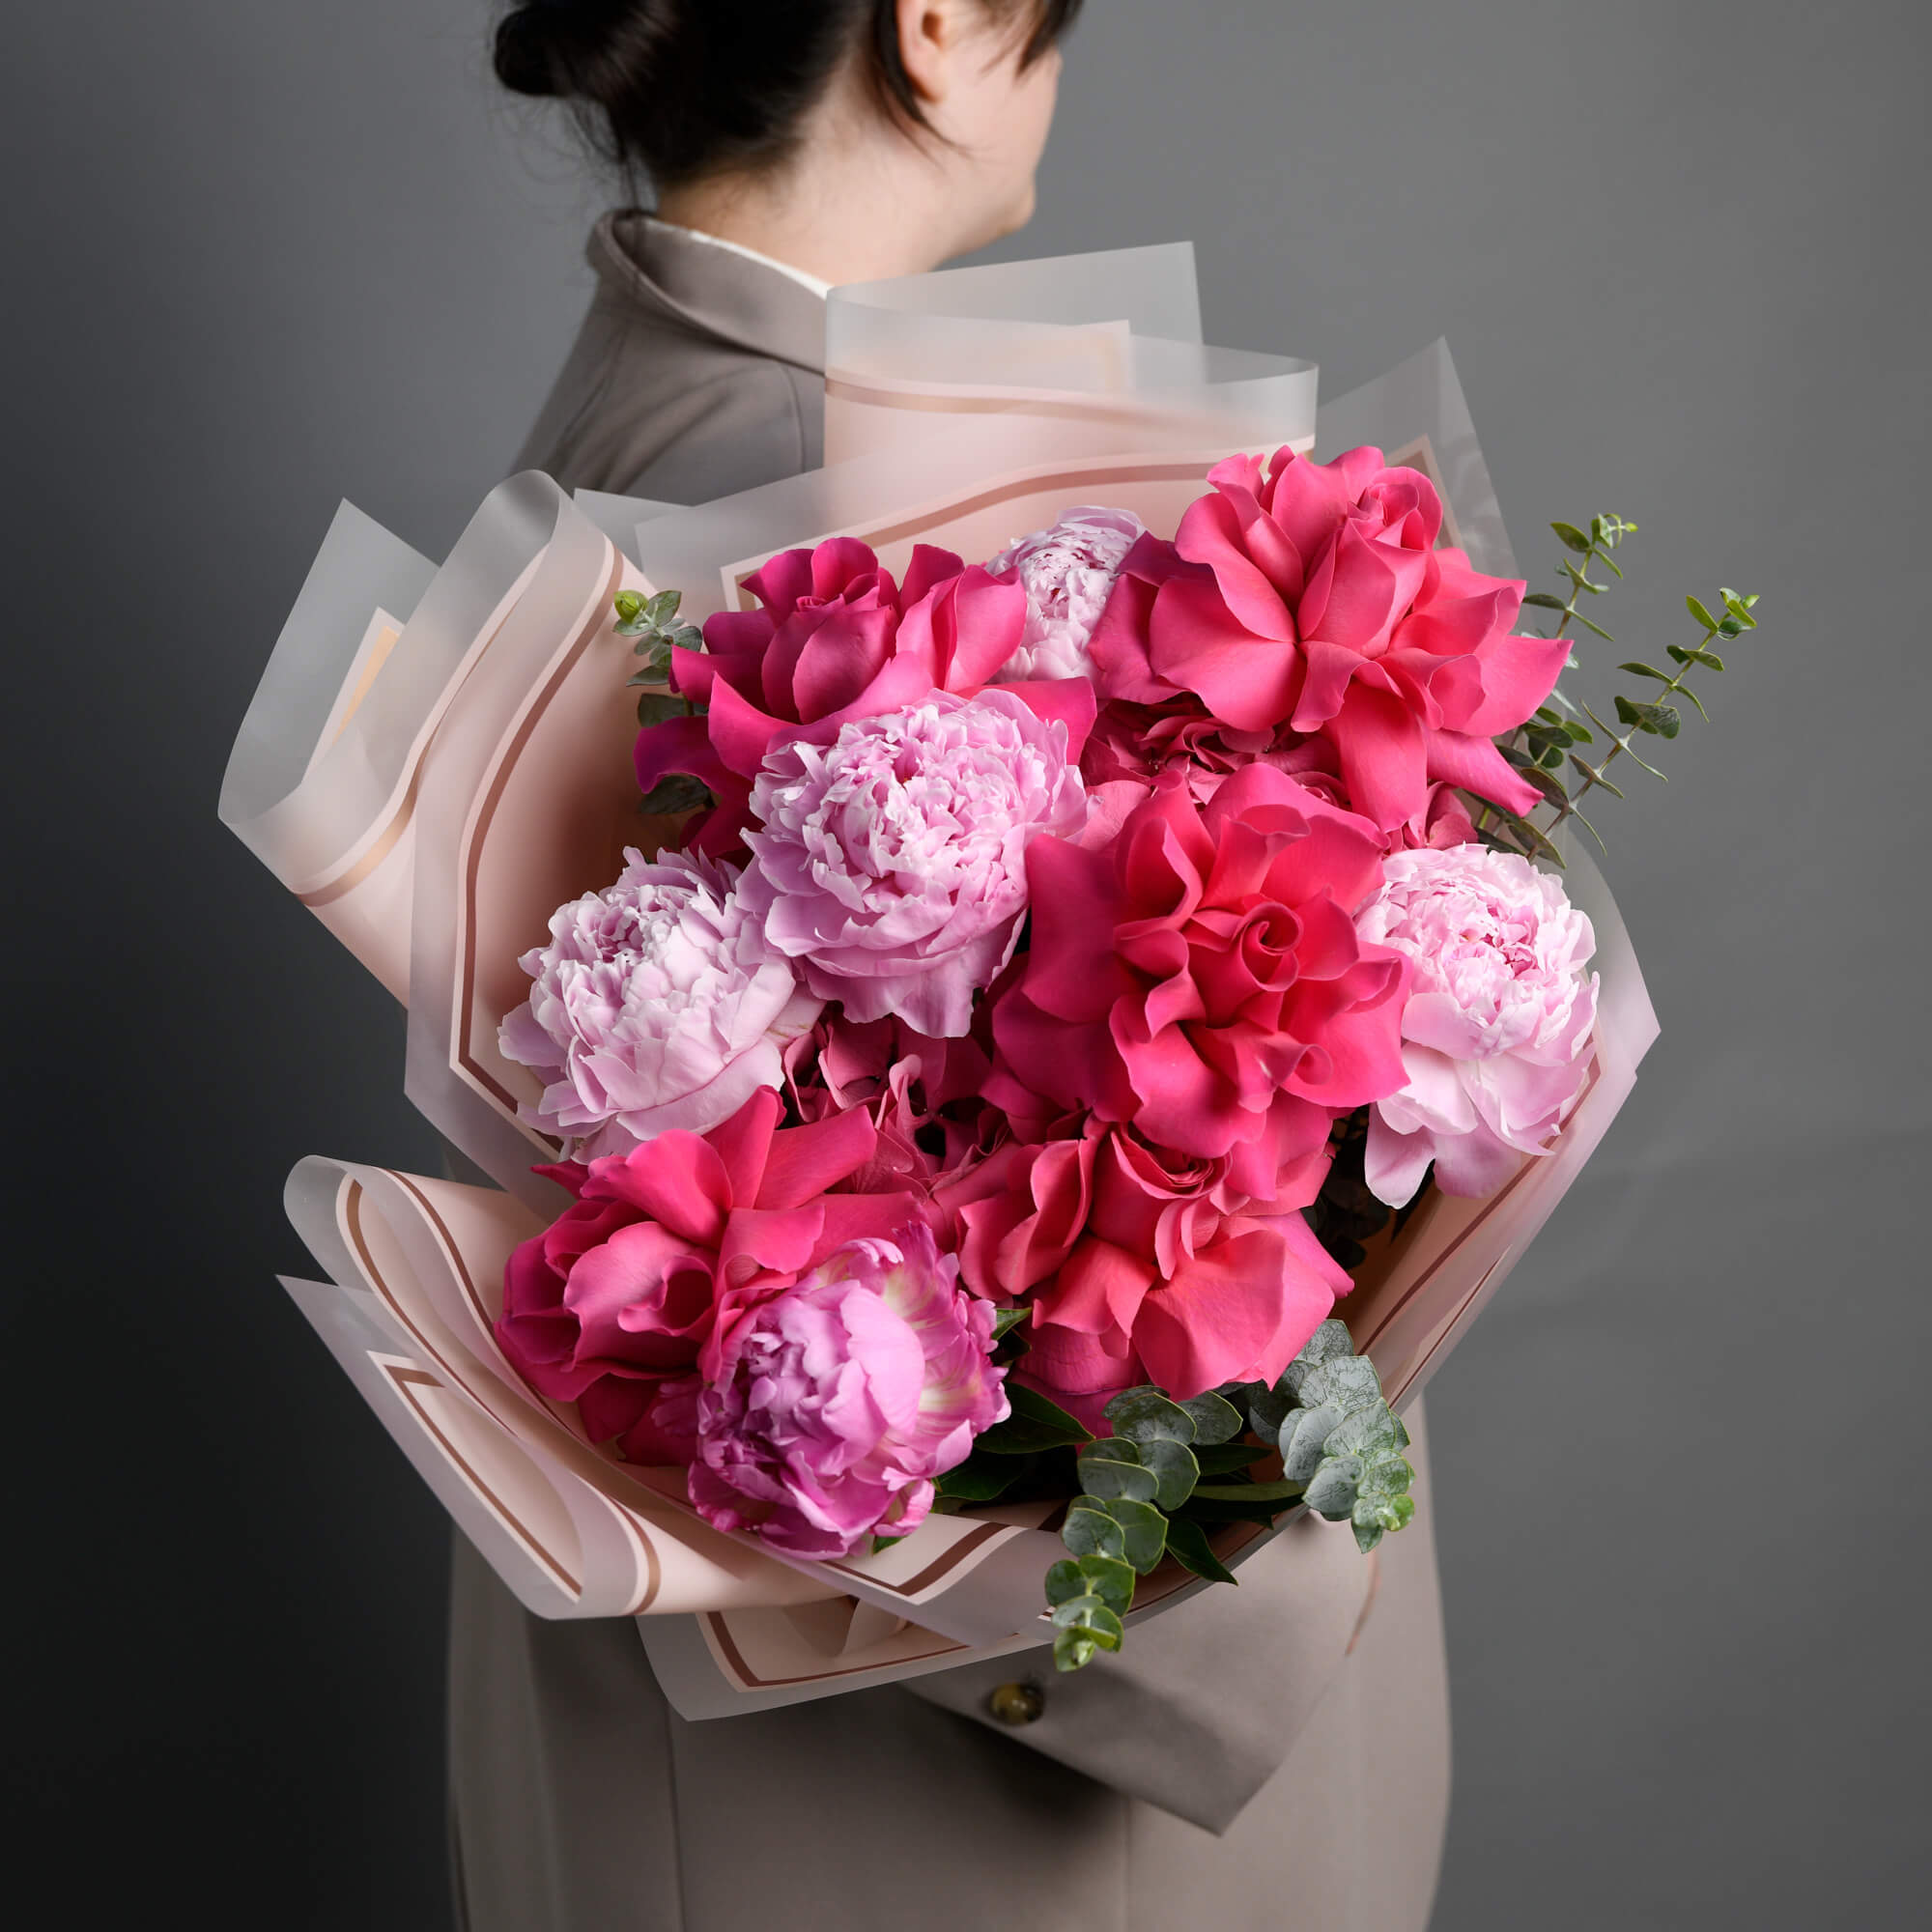 Buchet cu trandafiri Pink, hortensie si bujori roz, 2